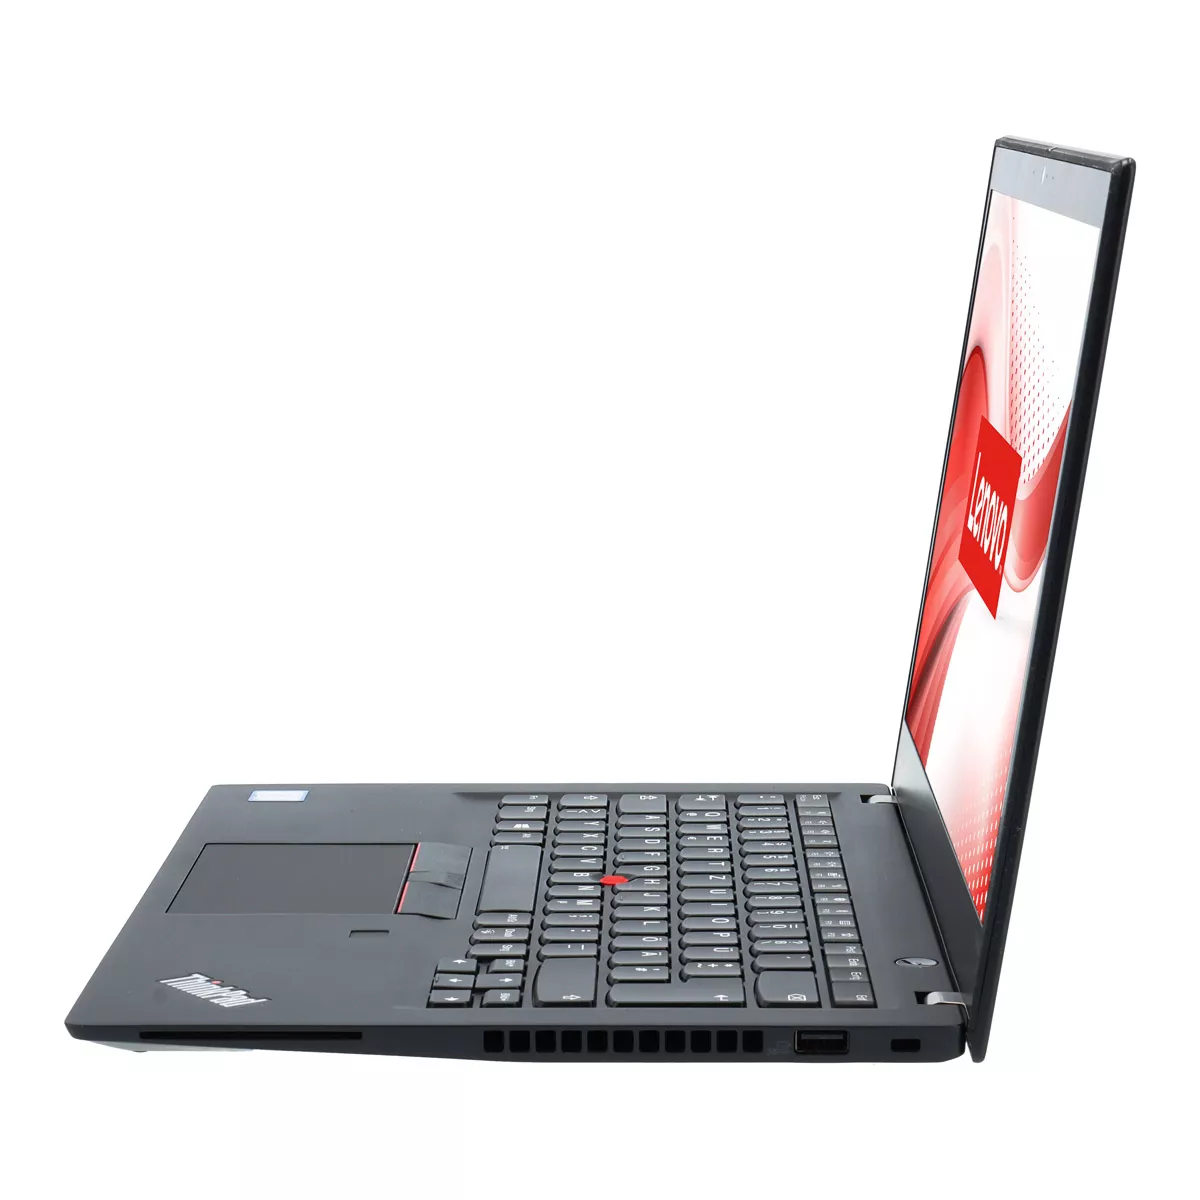 Lenovo ThinkPad T495 AMD Ryzen 5 Pro 3500U Full-HD Touch 500 GB M.2 nVME SSD Webcam A+